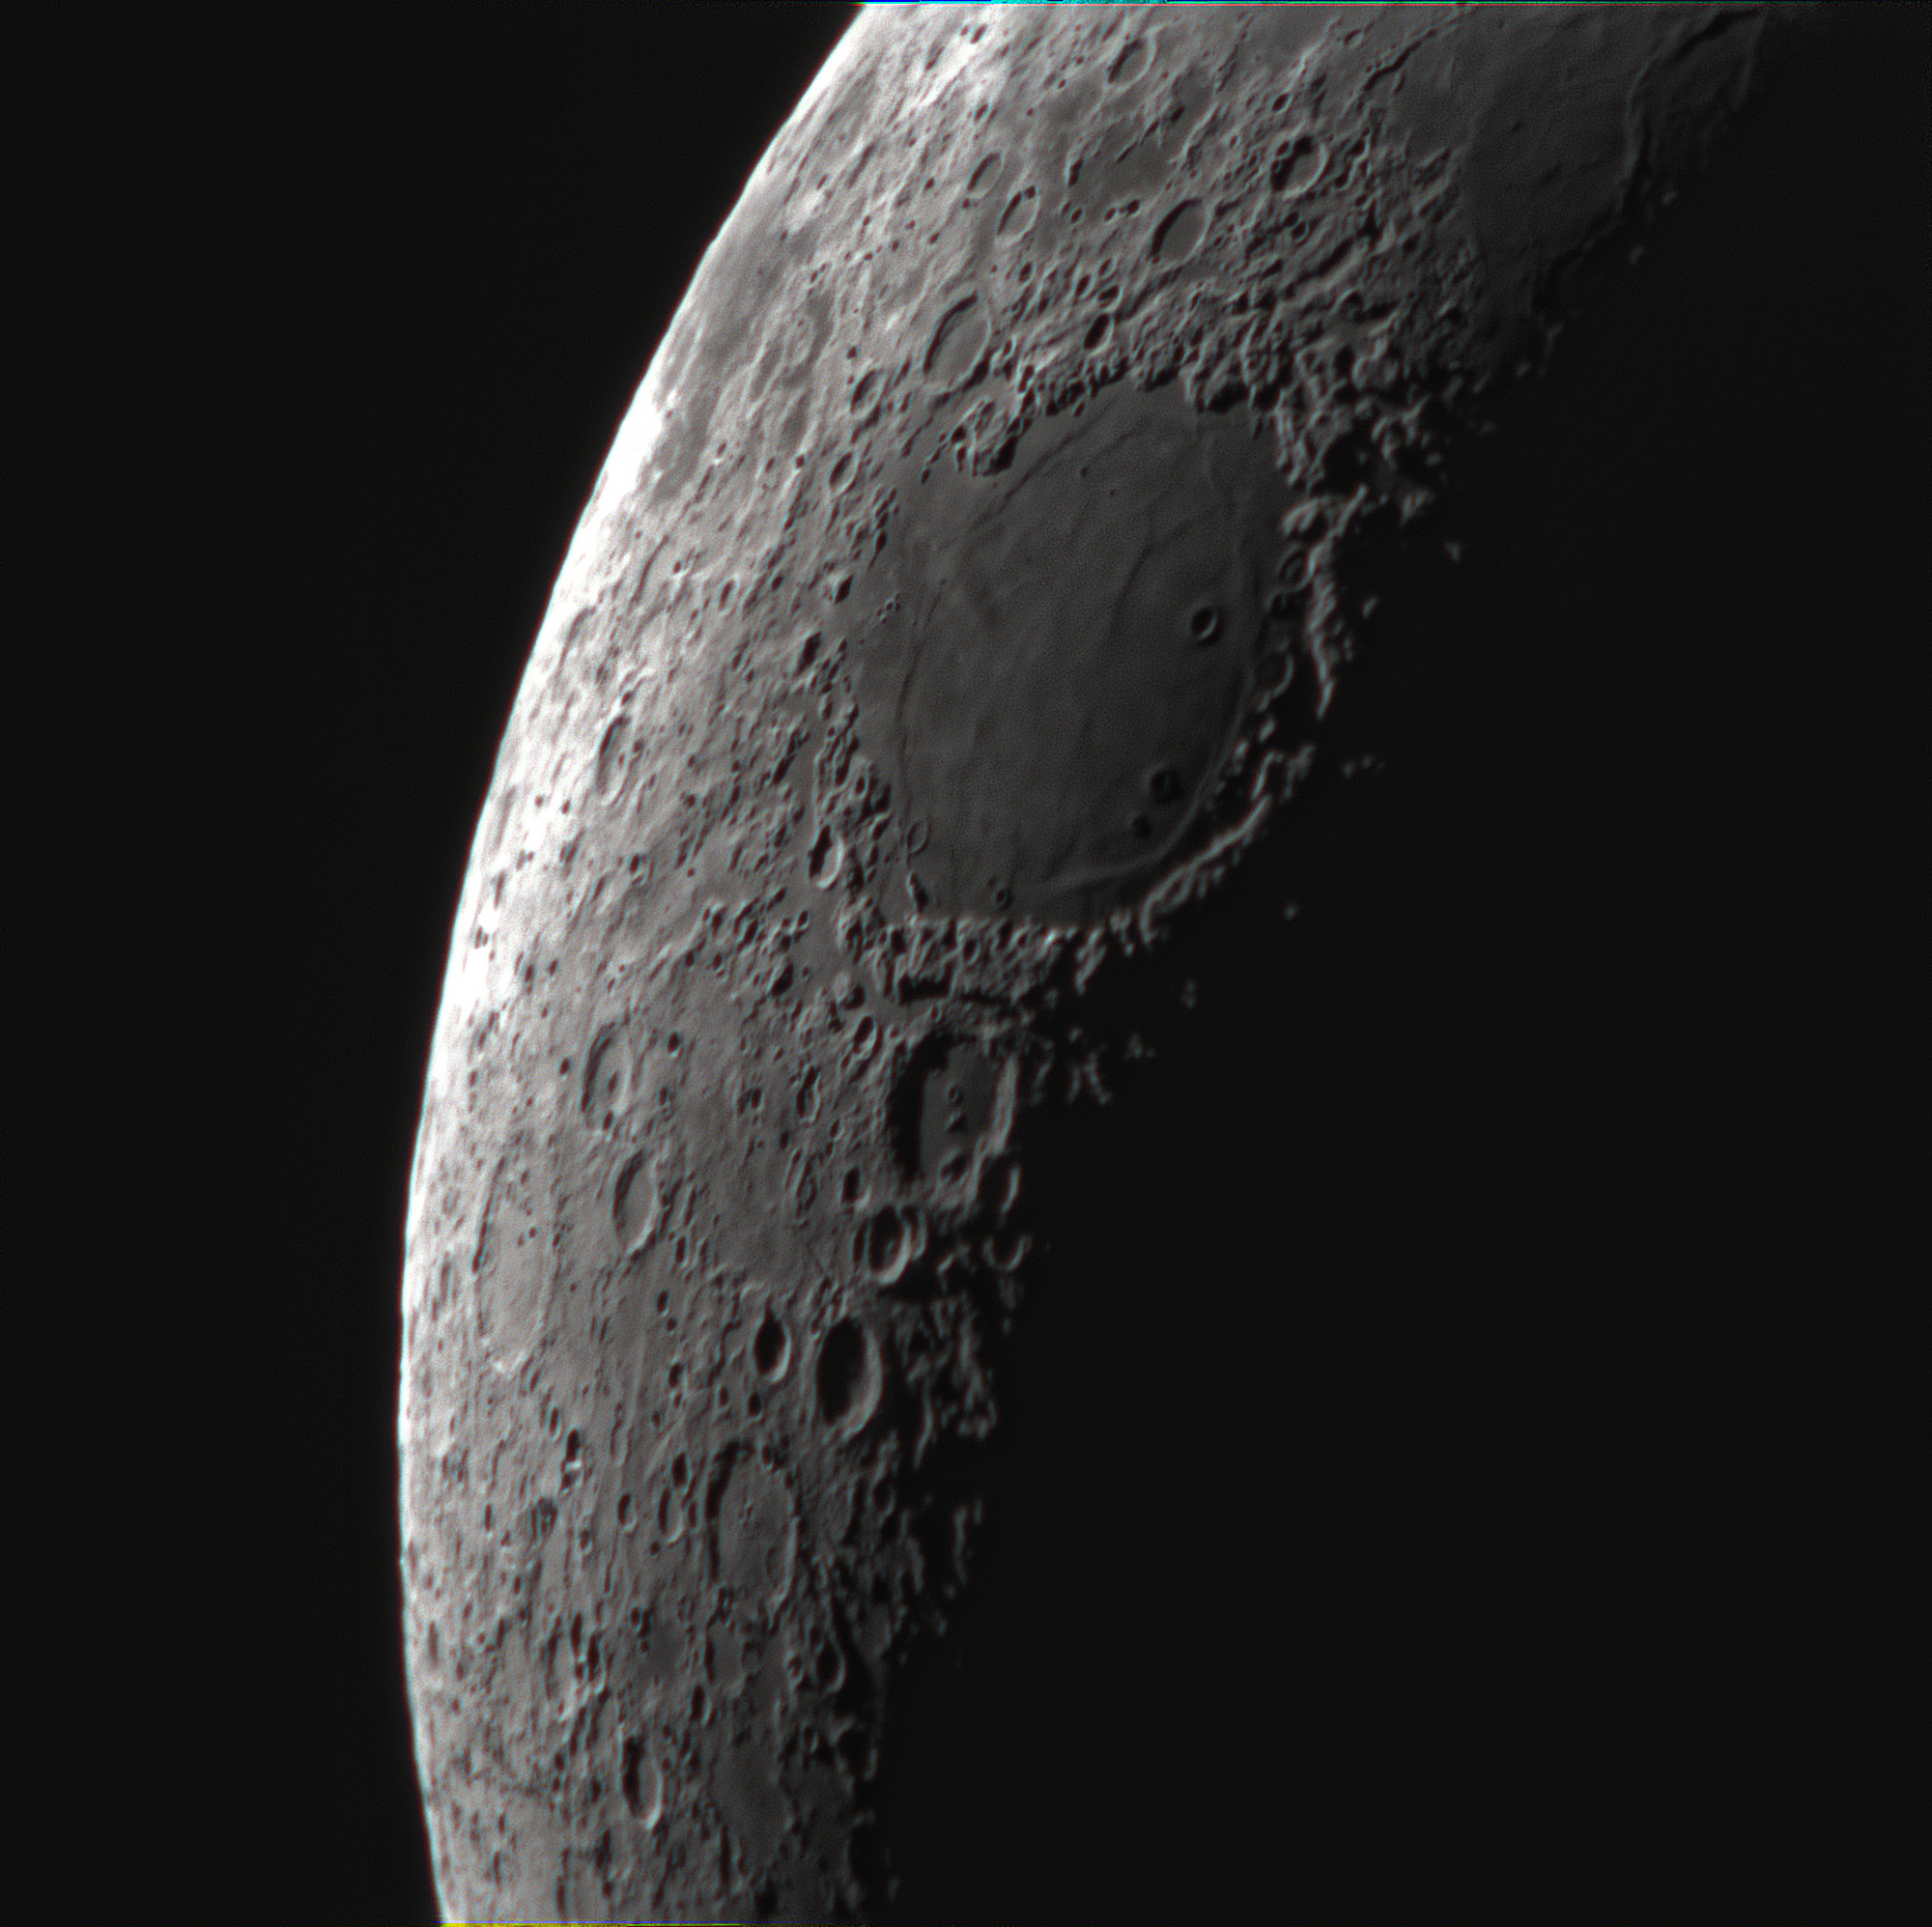 2022-02-04-1838_1-Moon_astrosurface_dxo.thumb.jpg.cf4b02e7b68a8cc2d287e037ef023d89.jpg